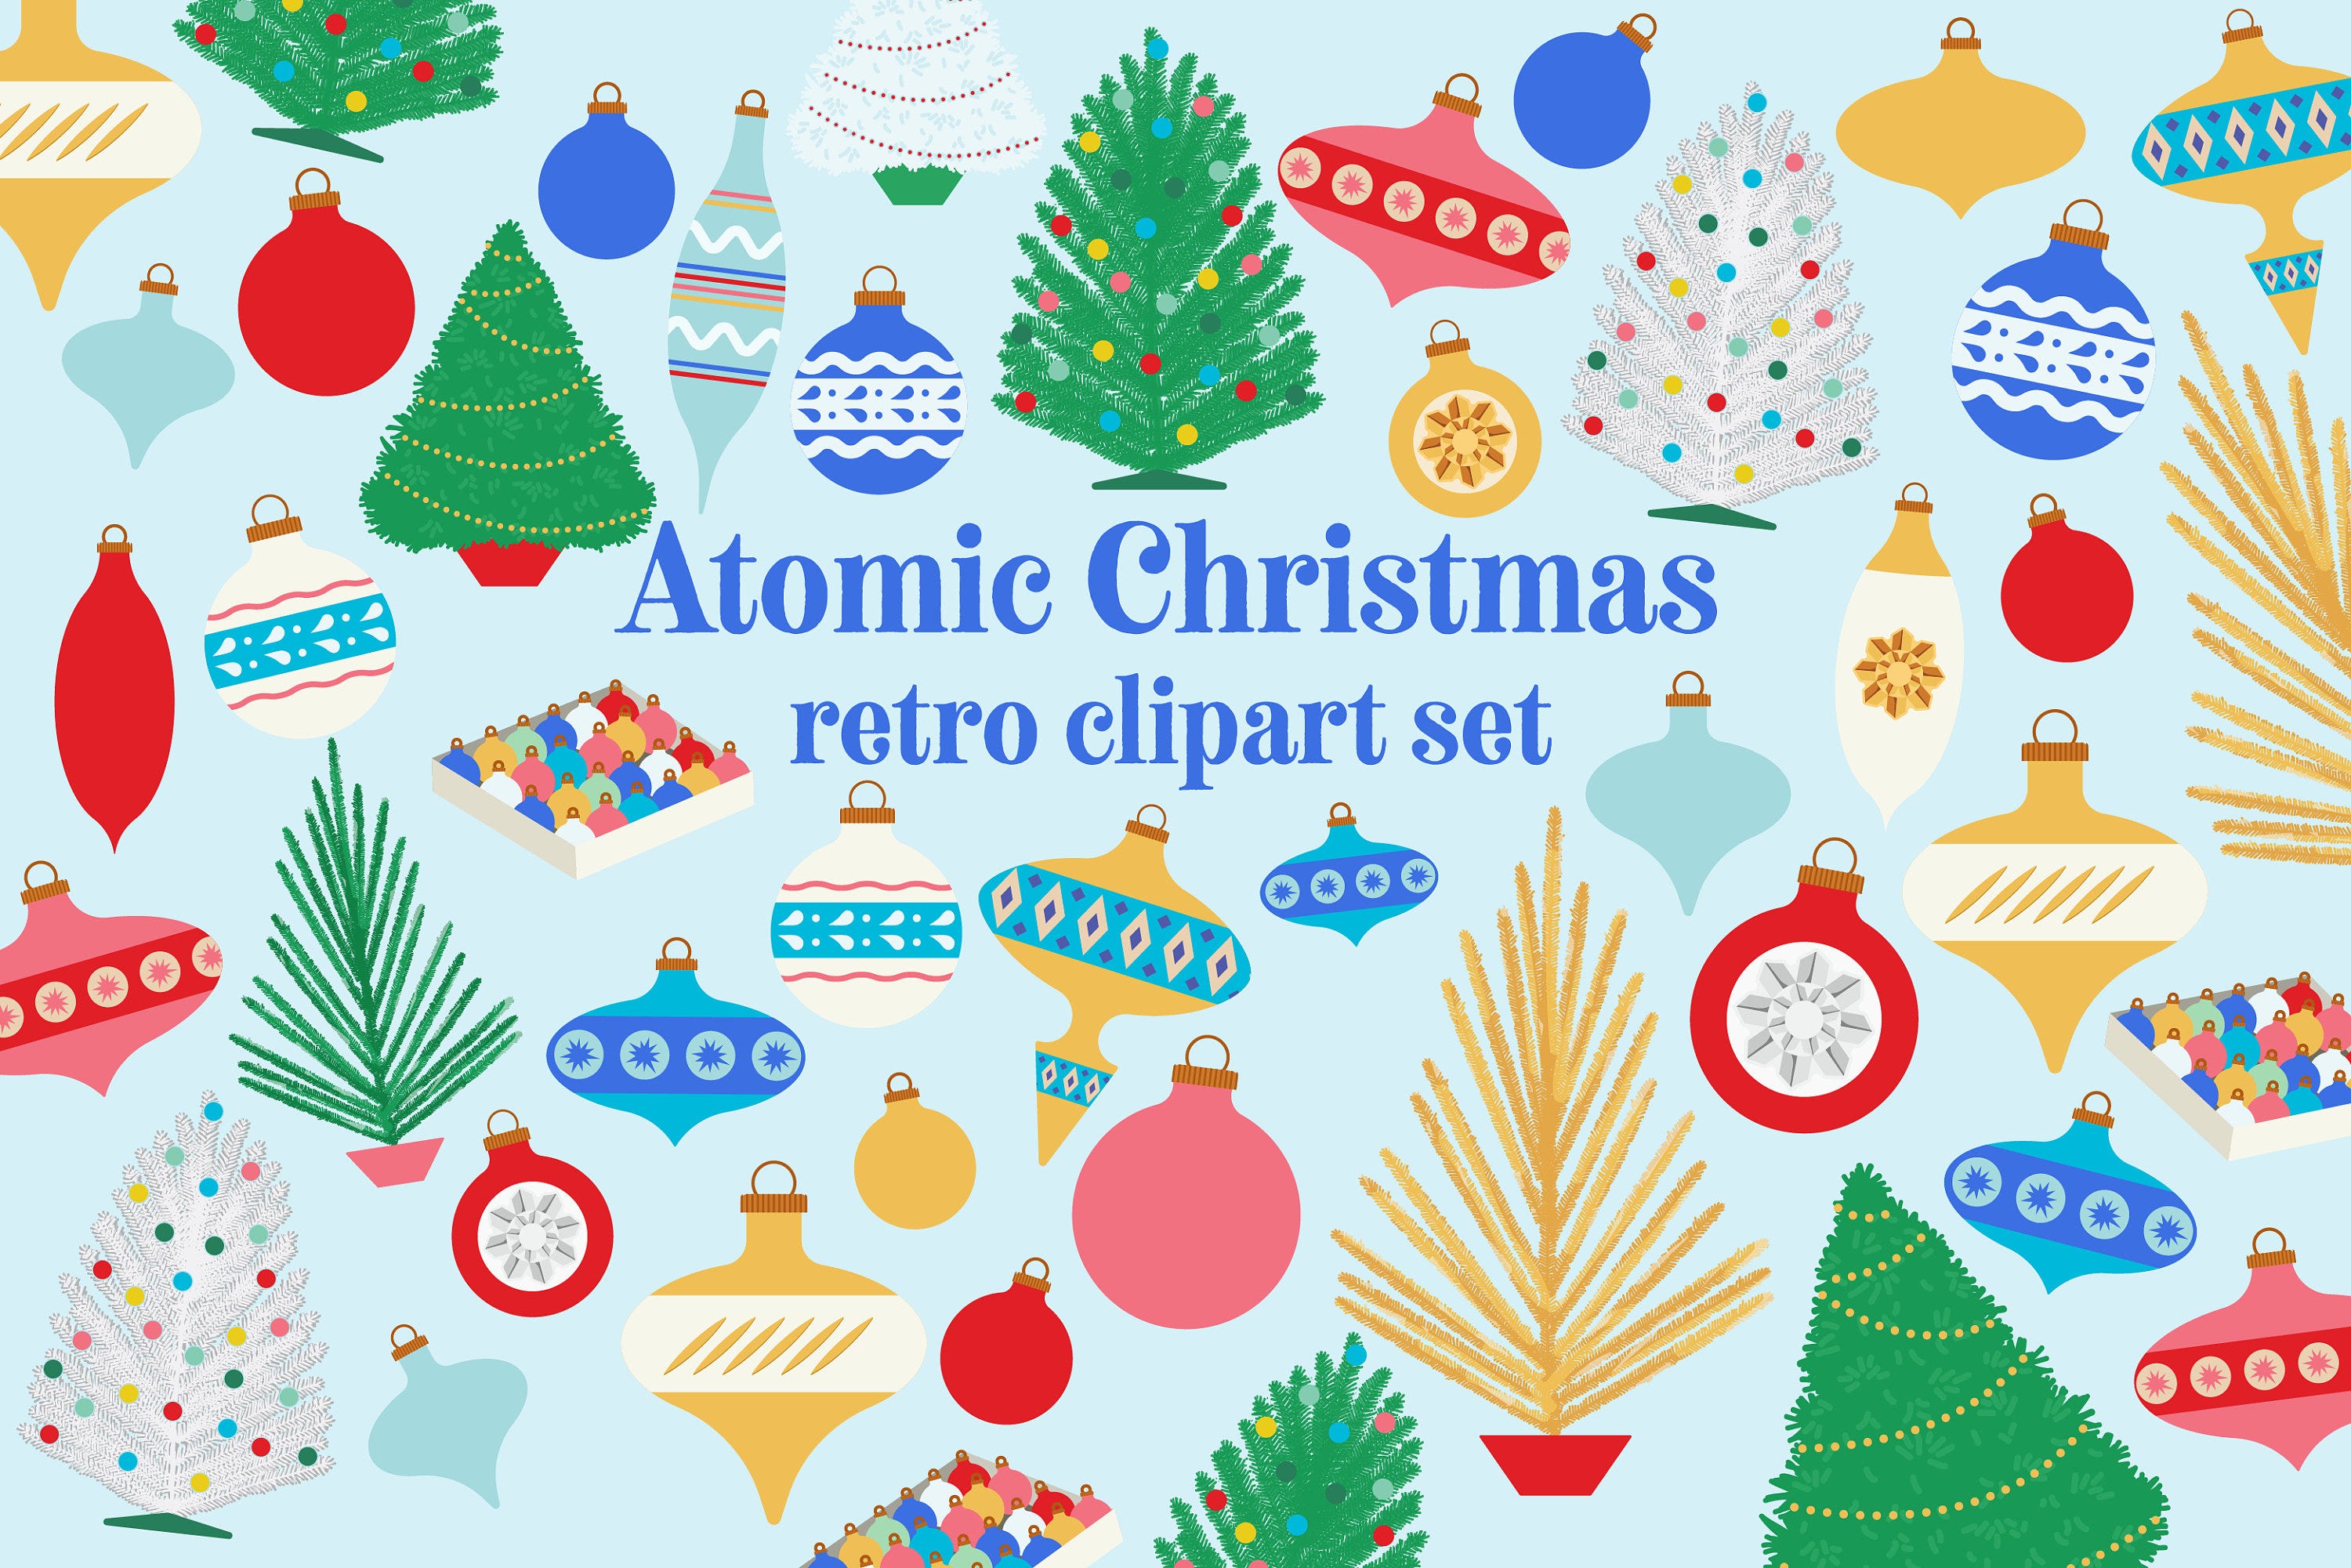 Atomic Christmas retro clipart set Mid Century retro Christmas ornaments and trees clip art holidays 40s 50s 60s 70s